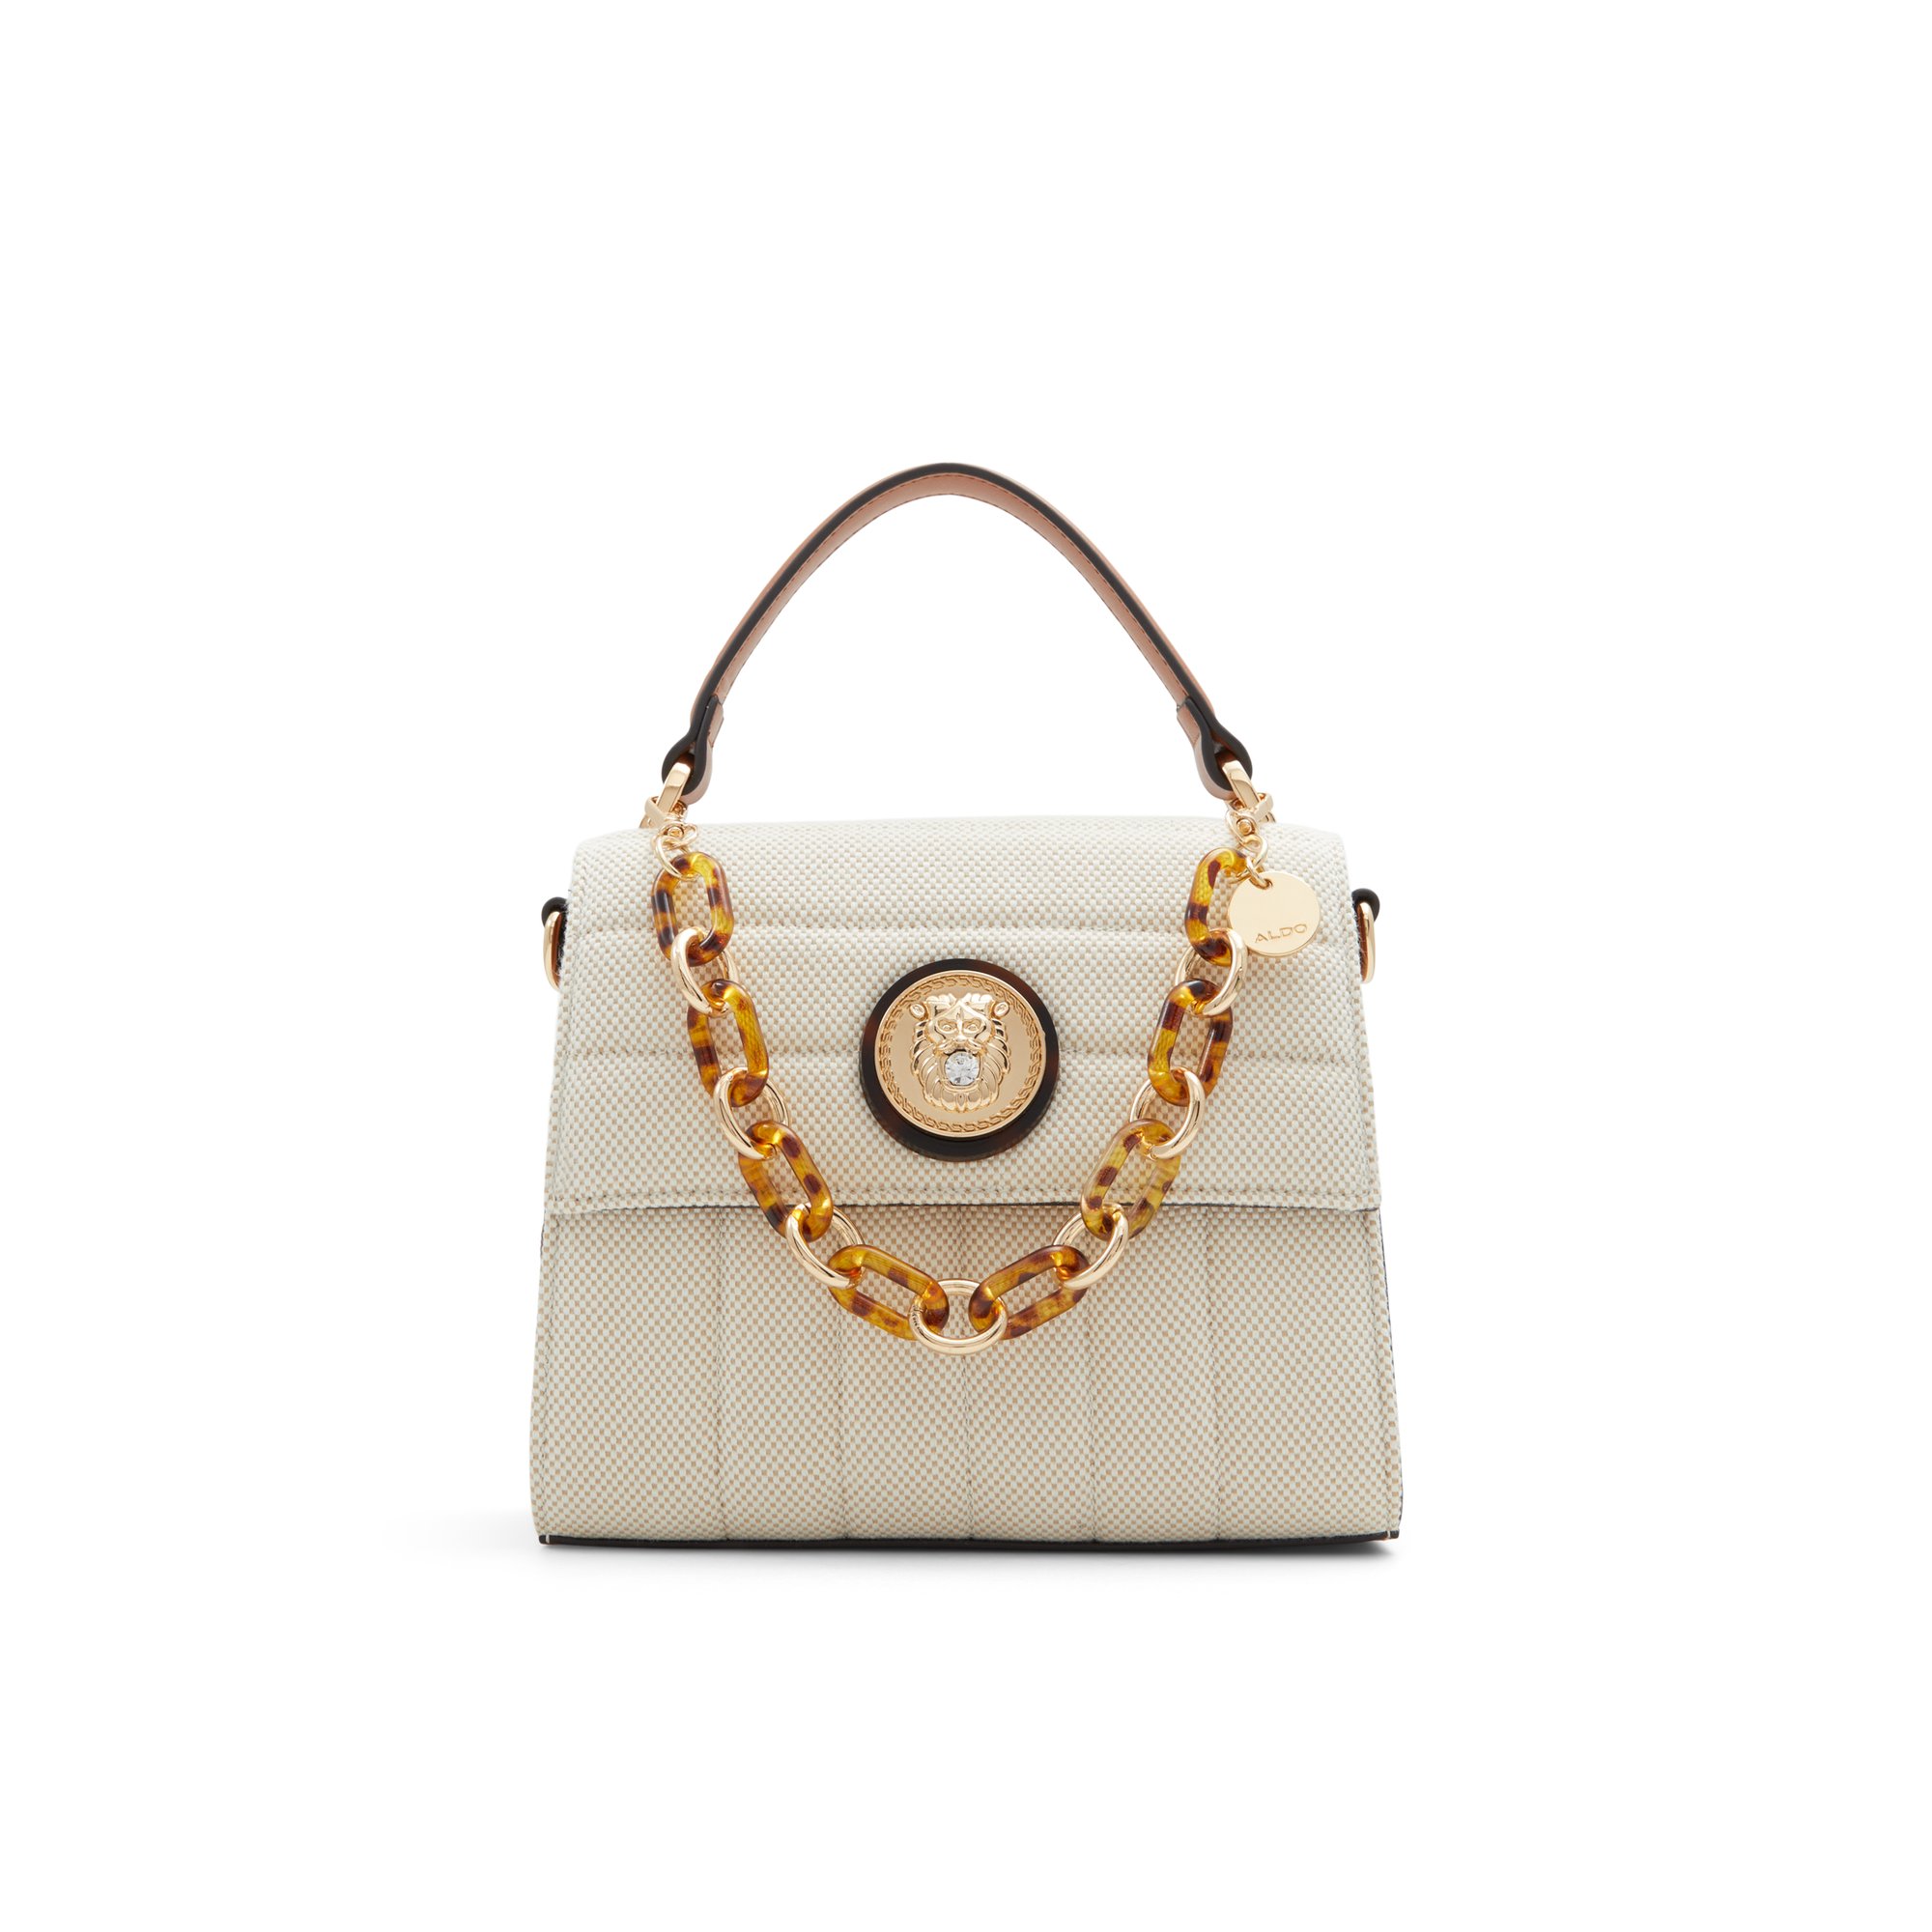 ALDO Vardonalx - Women's Top Handle Handbag - Beige